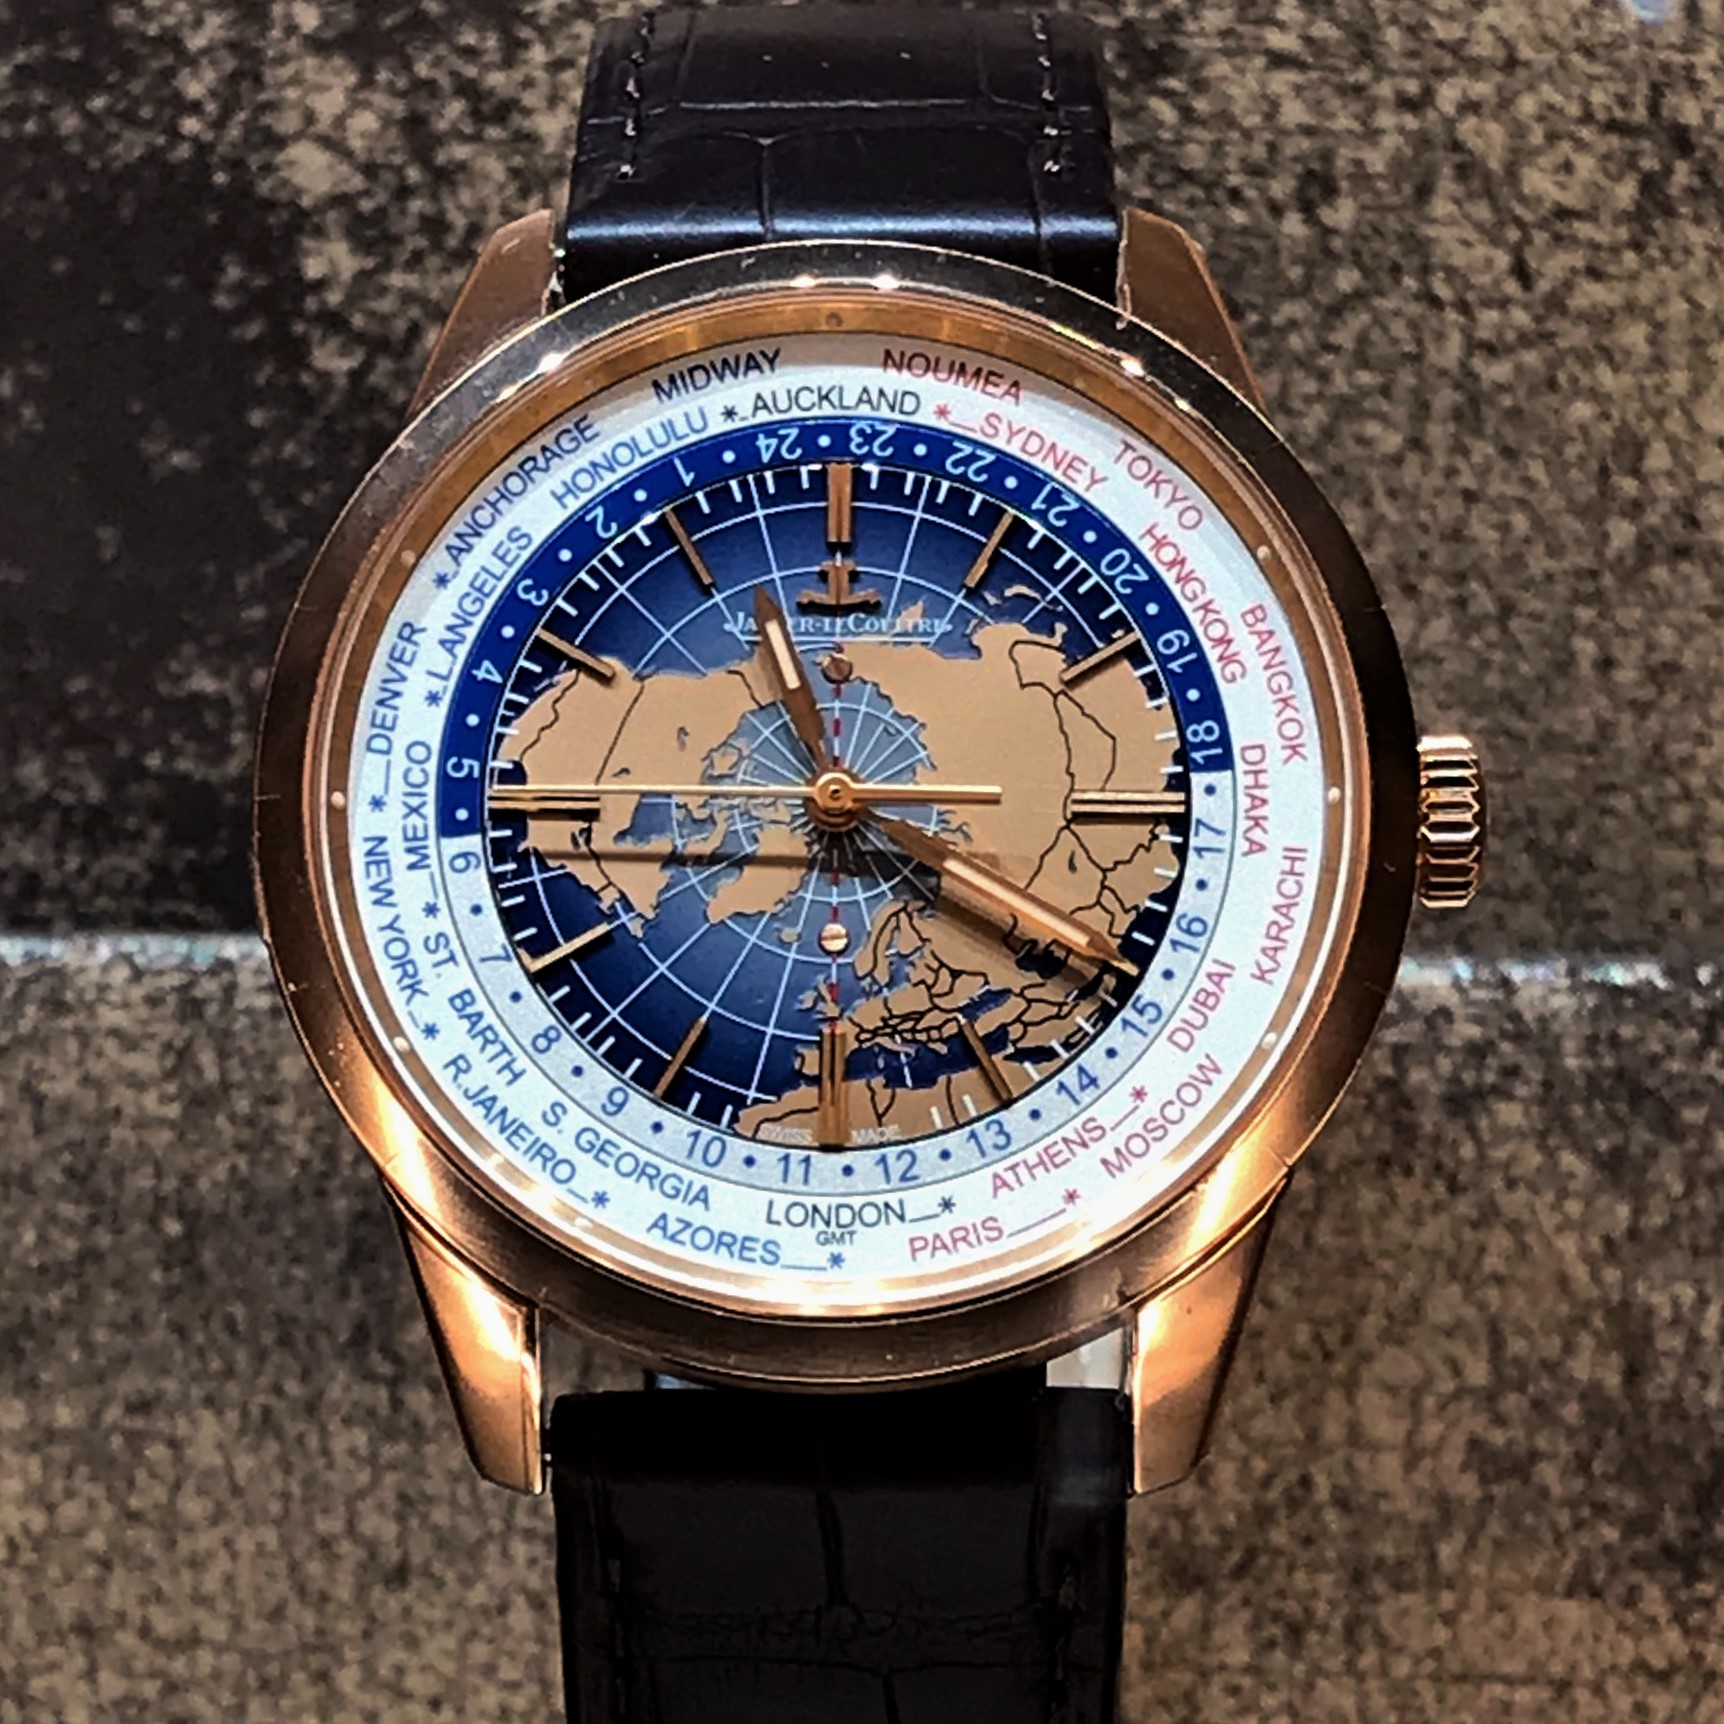 Geophysic_8102520 worldtimer watch